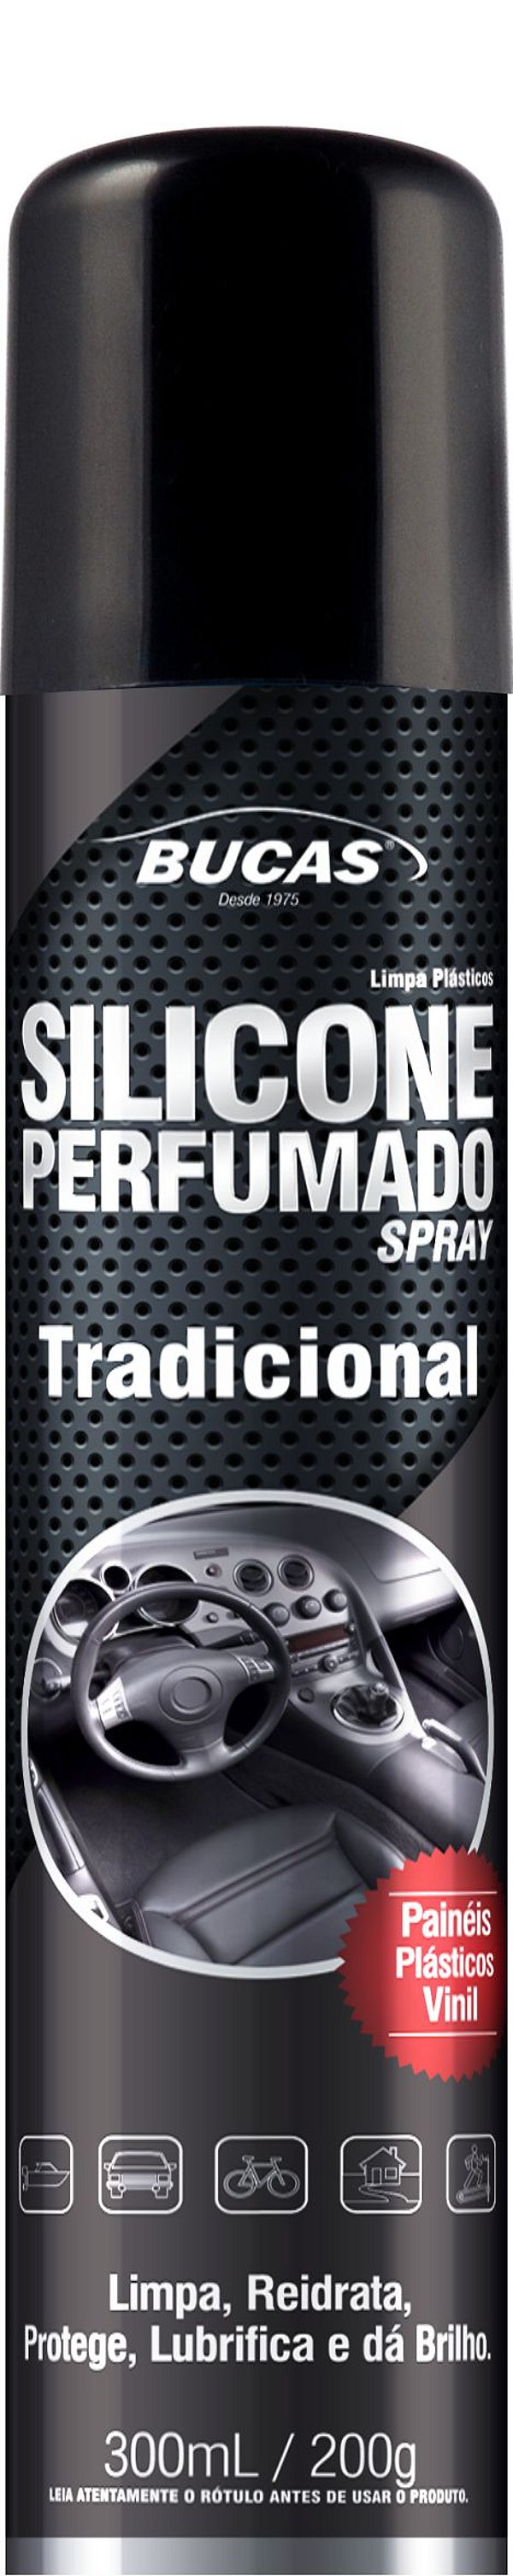 BUCAS Silicone Spray Perfumado - Tradicional